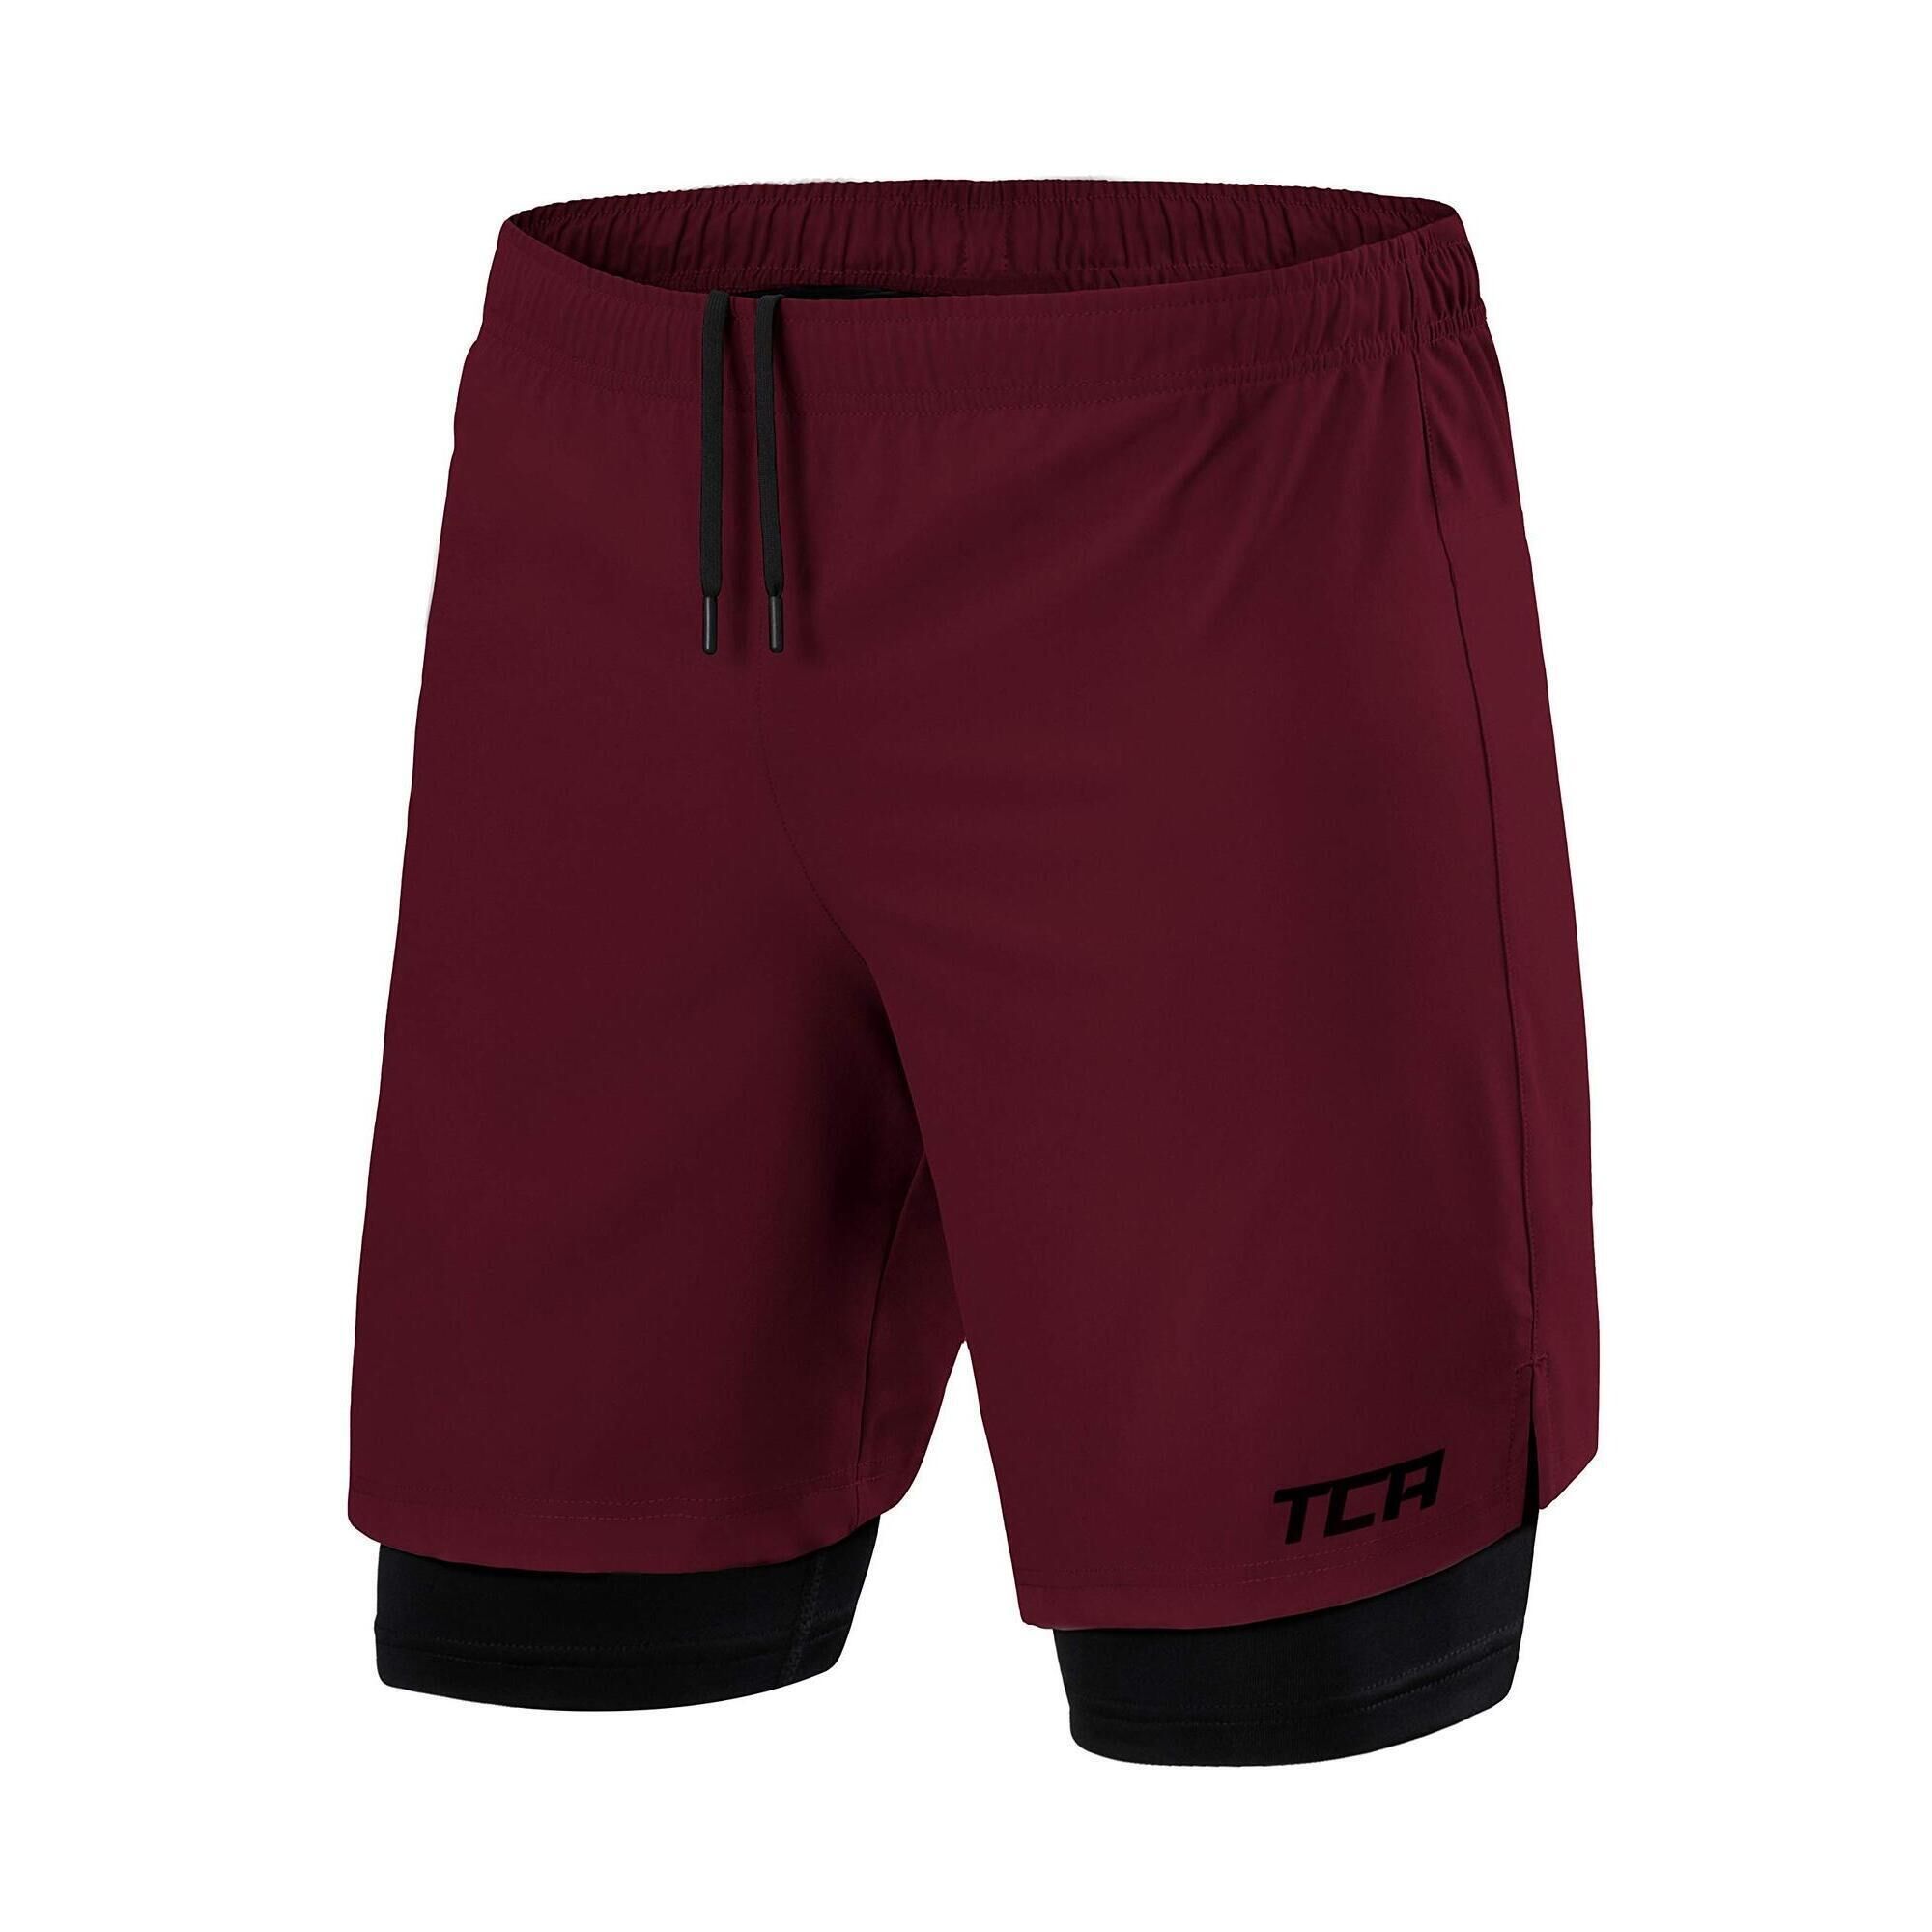 TCA Men's Ultra 2-in-1 Running Shorts with Key Pocket - Cabernet / Black